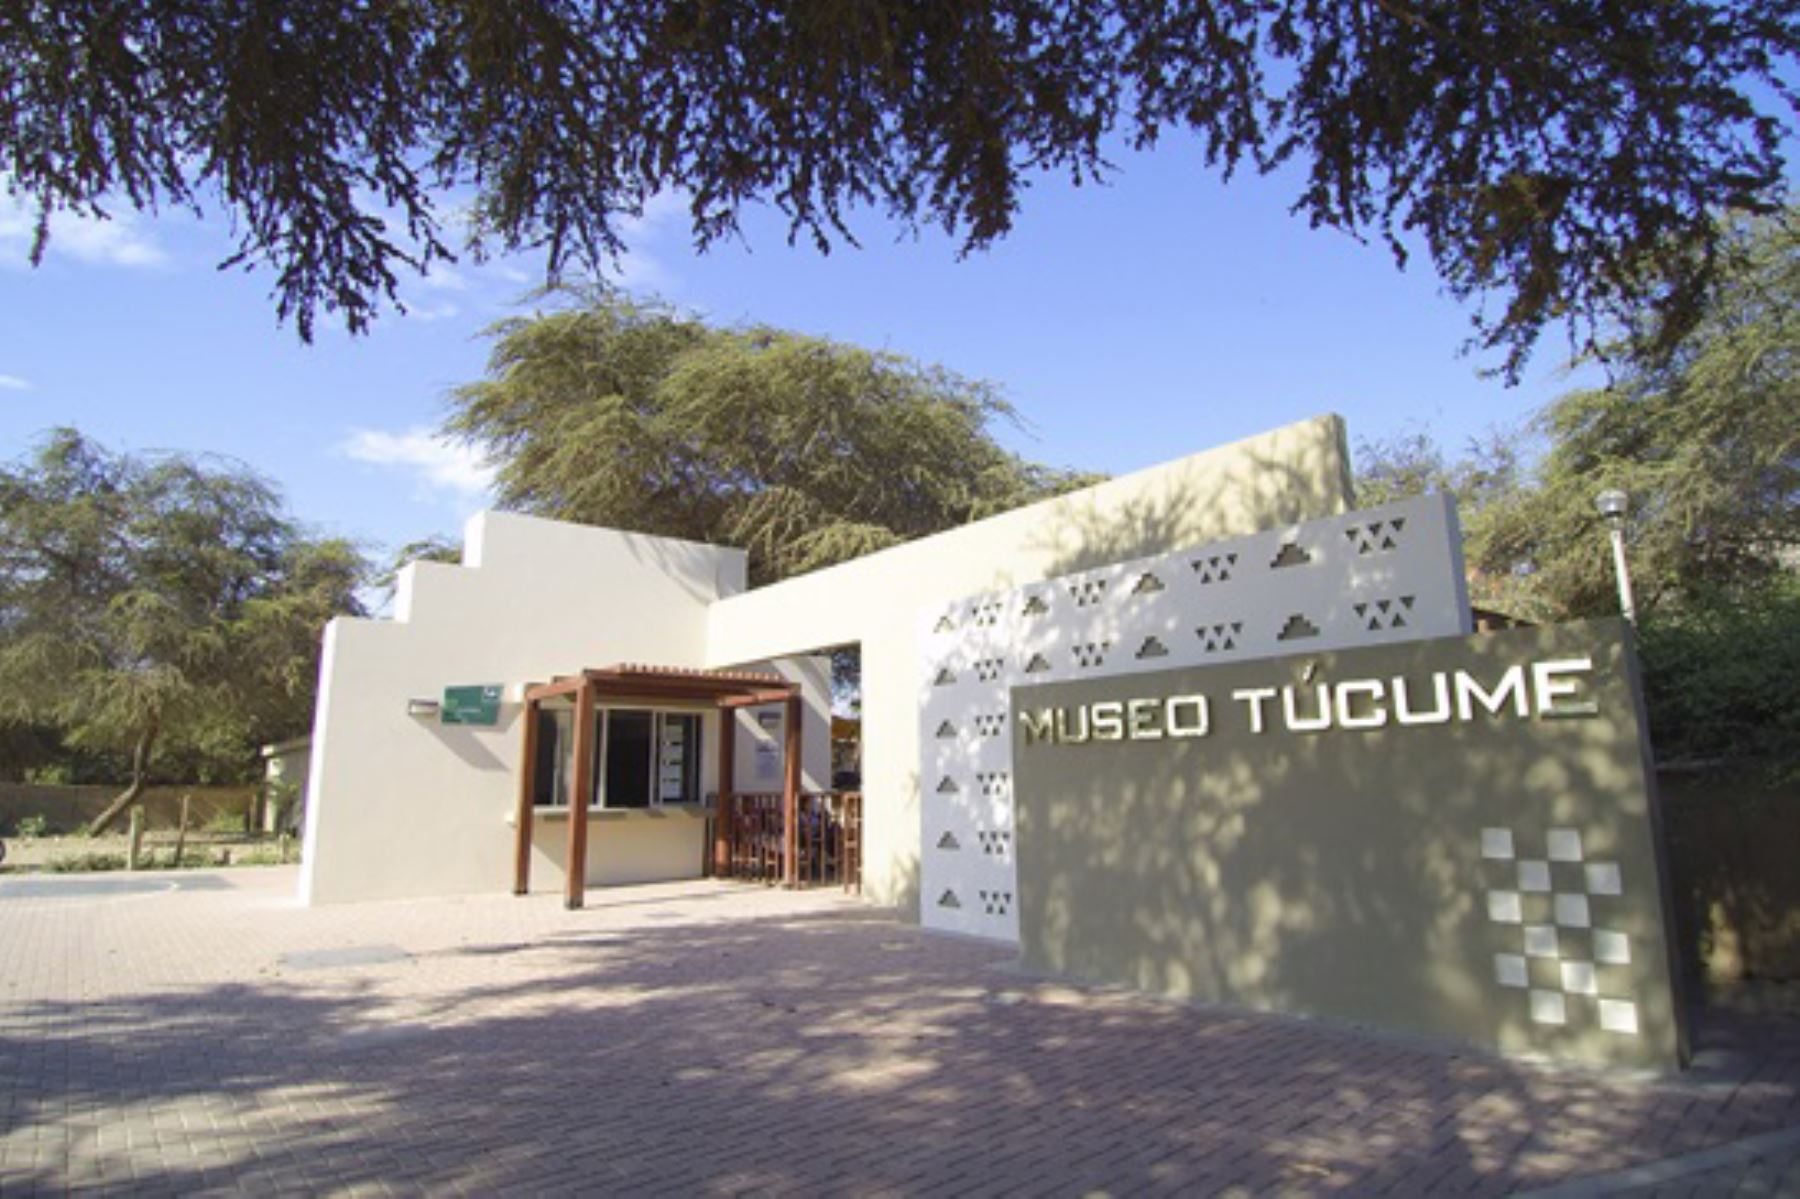 Museo de Sitio Túcume. Foto: ANDINA/Archivo